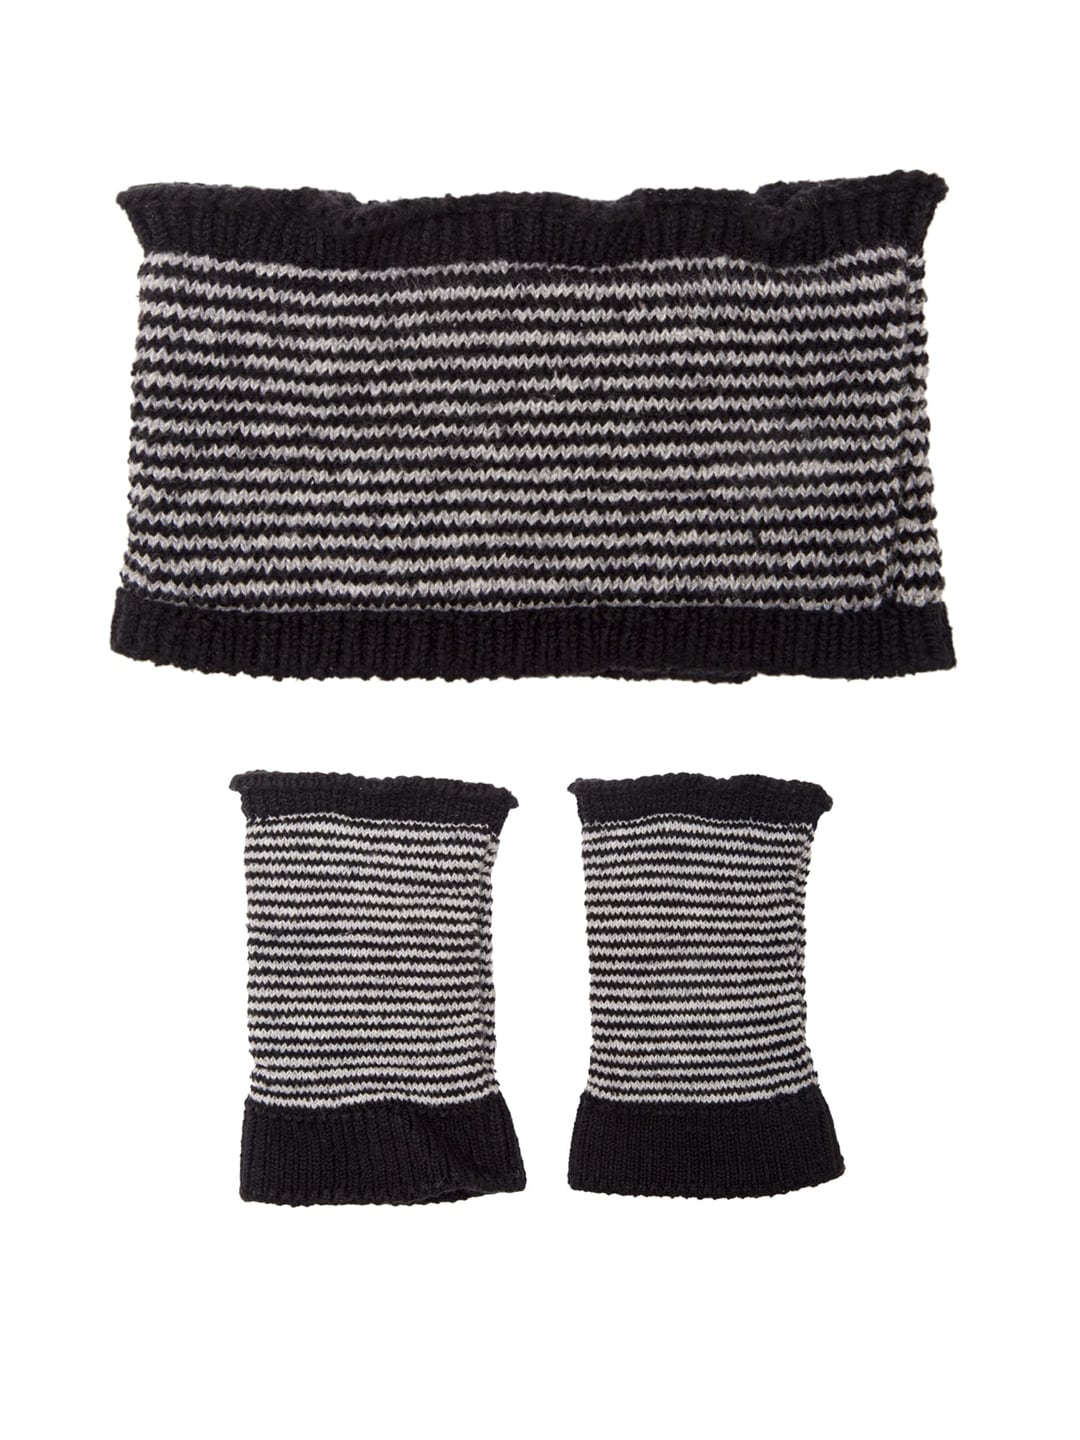 Bharatasya Unisex Black & White Striped Cotton Headband With Gloves Price in India